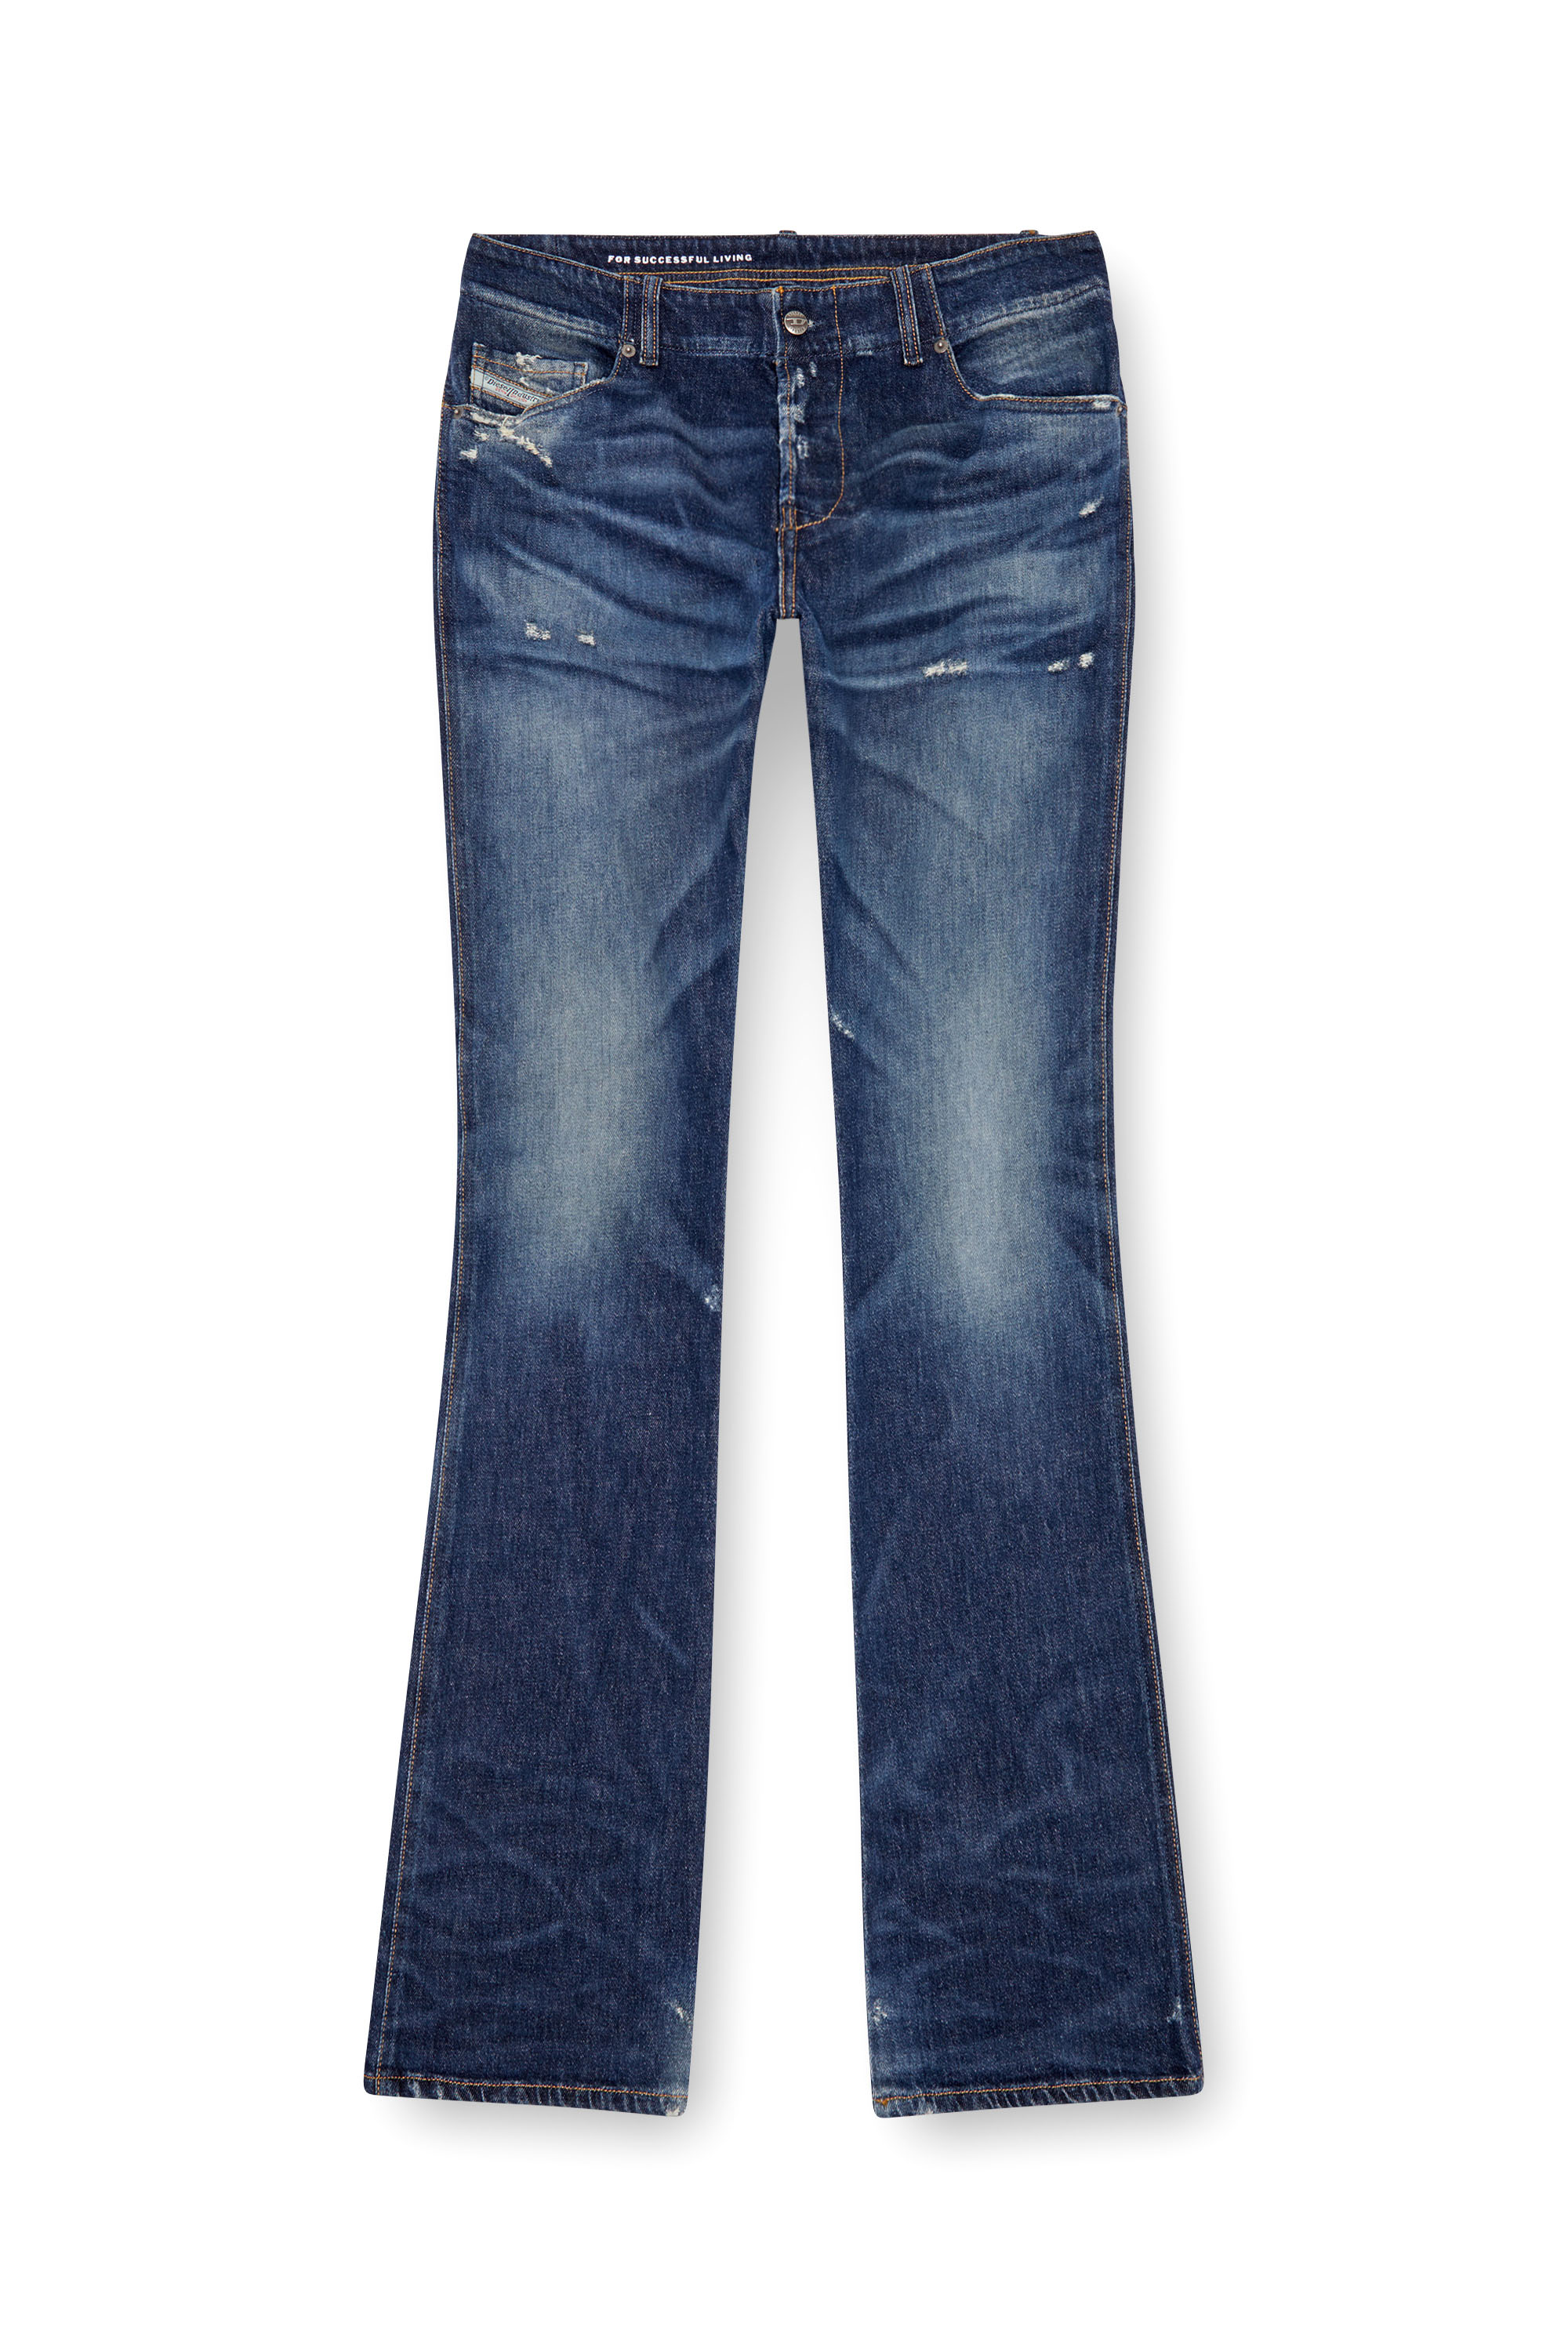 Diesel - Bootcut Jeans D-Backler 09J56, Hombre Bootcut Jeans - D-Backler in Azul marino - Image 5